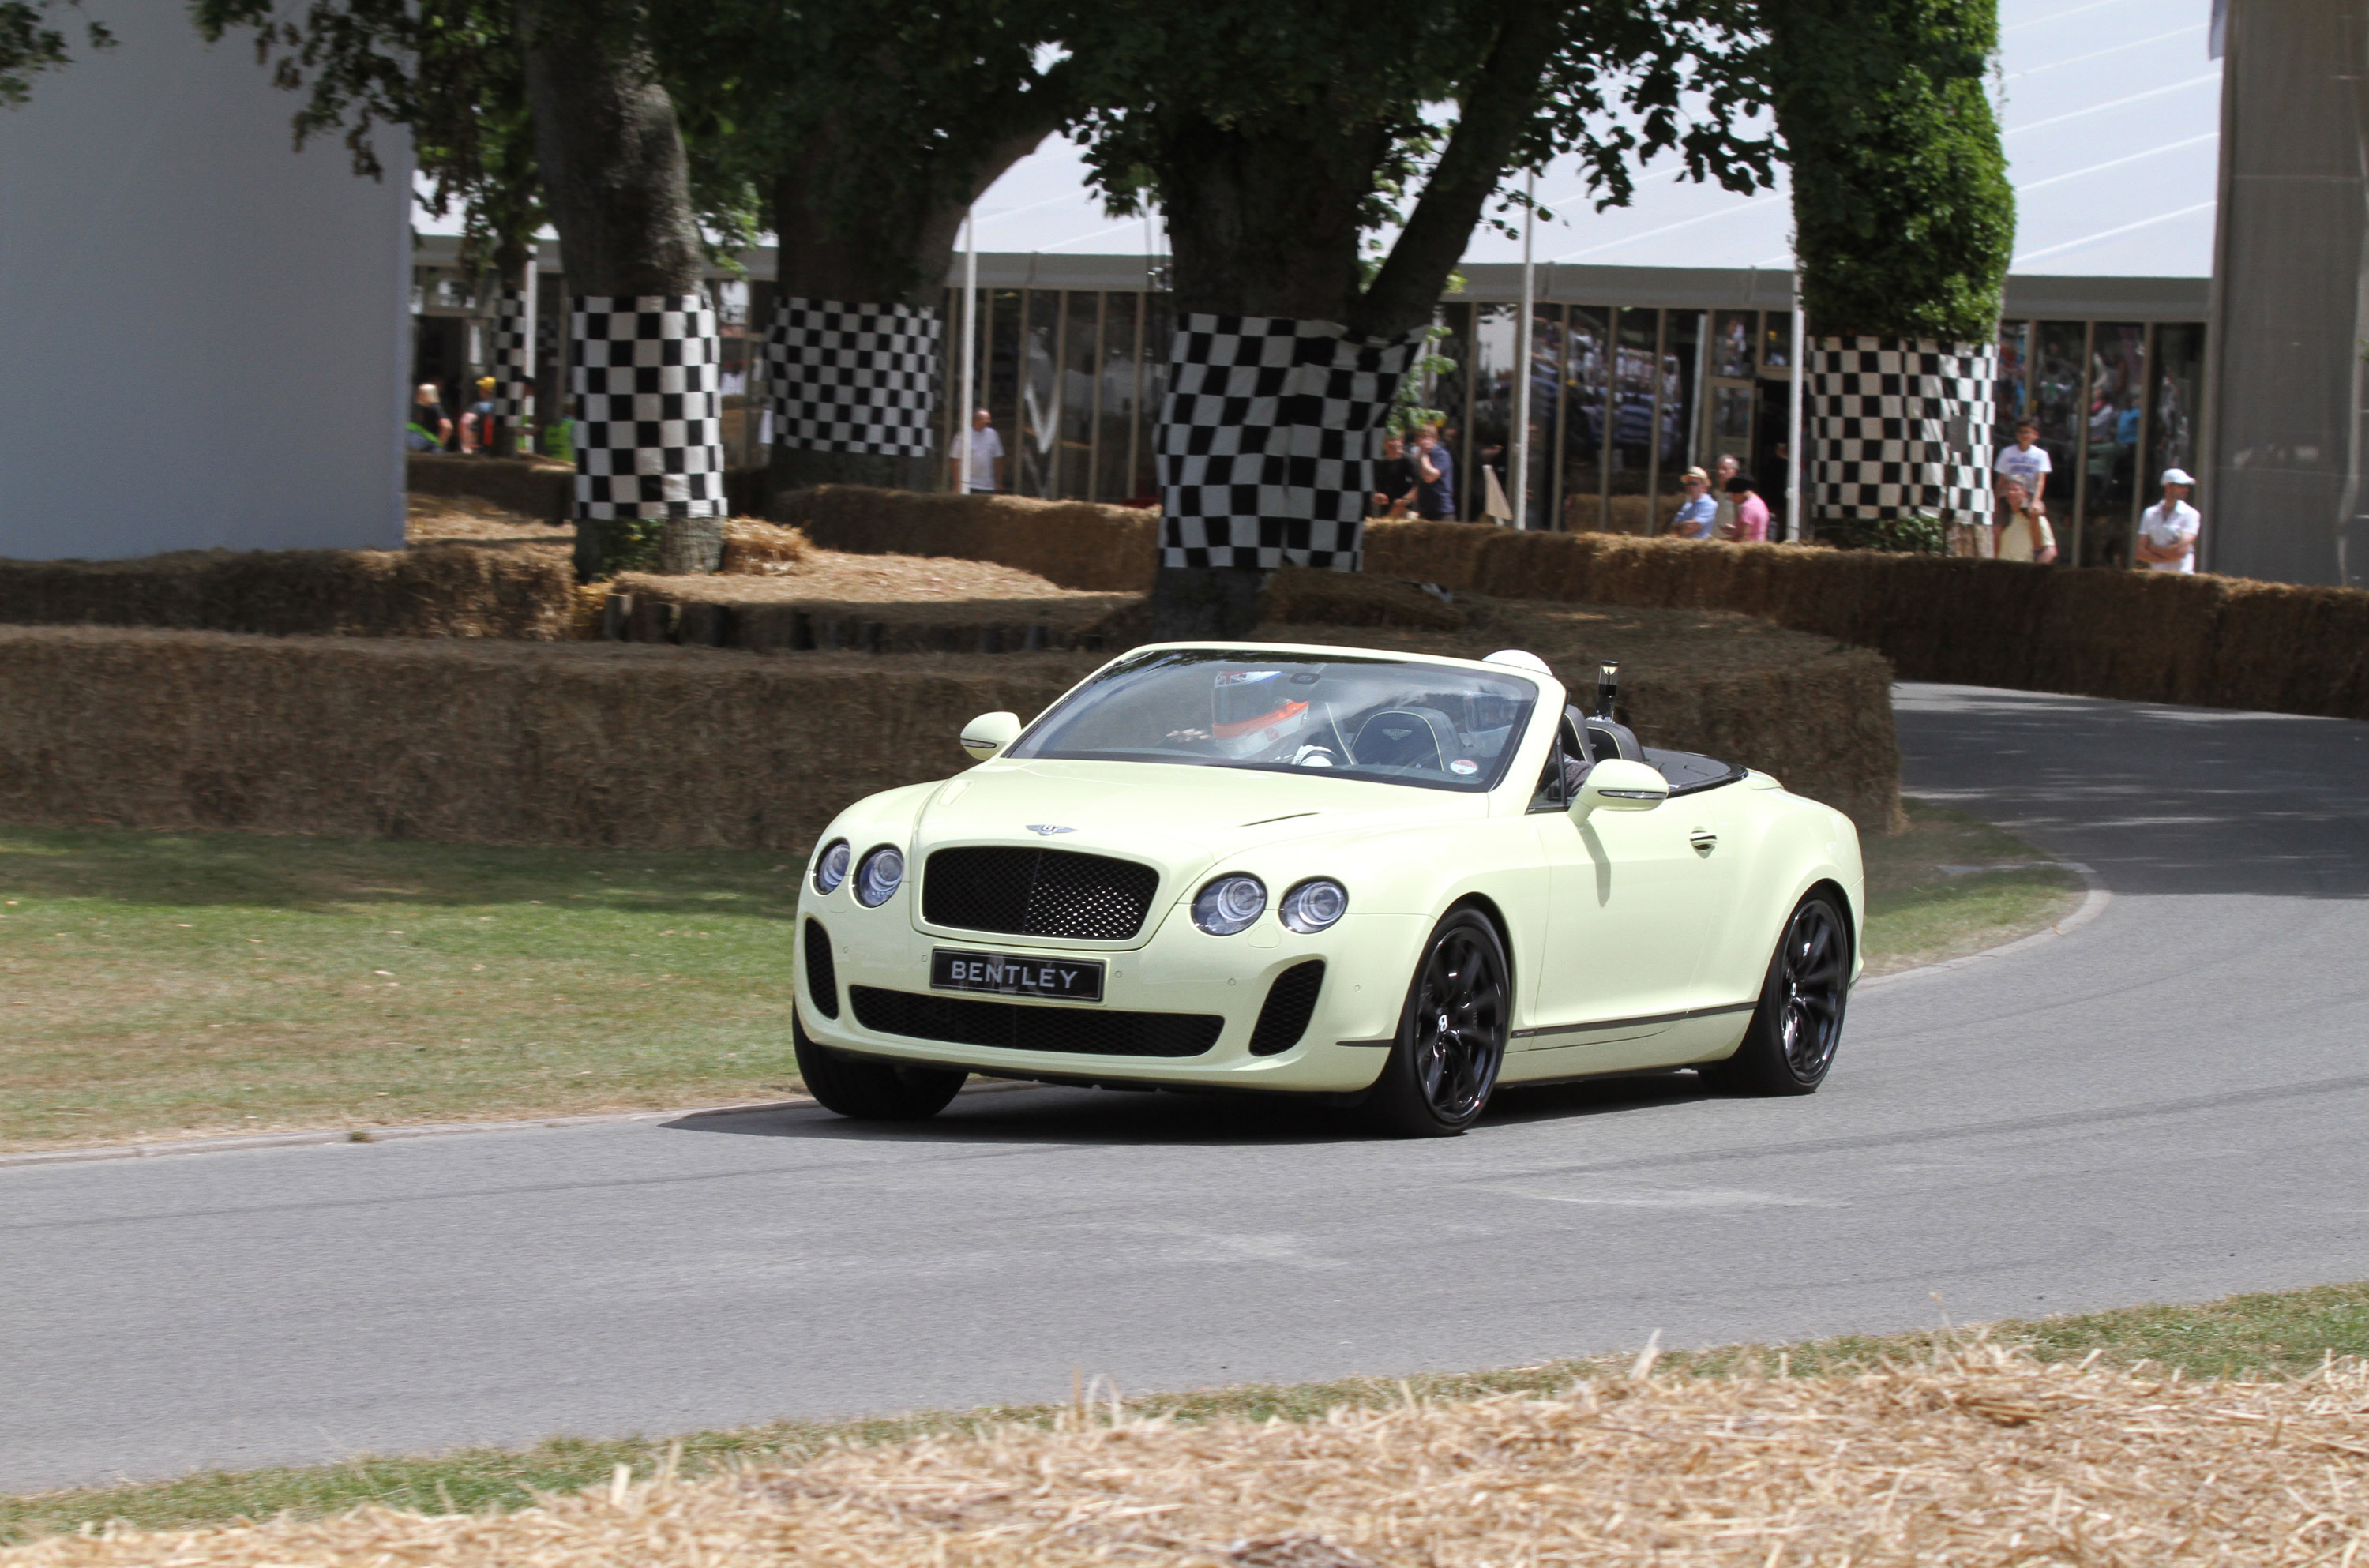 2011 Bentley Continental Supersports Convertible at Goodwood